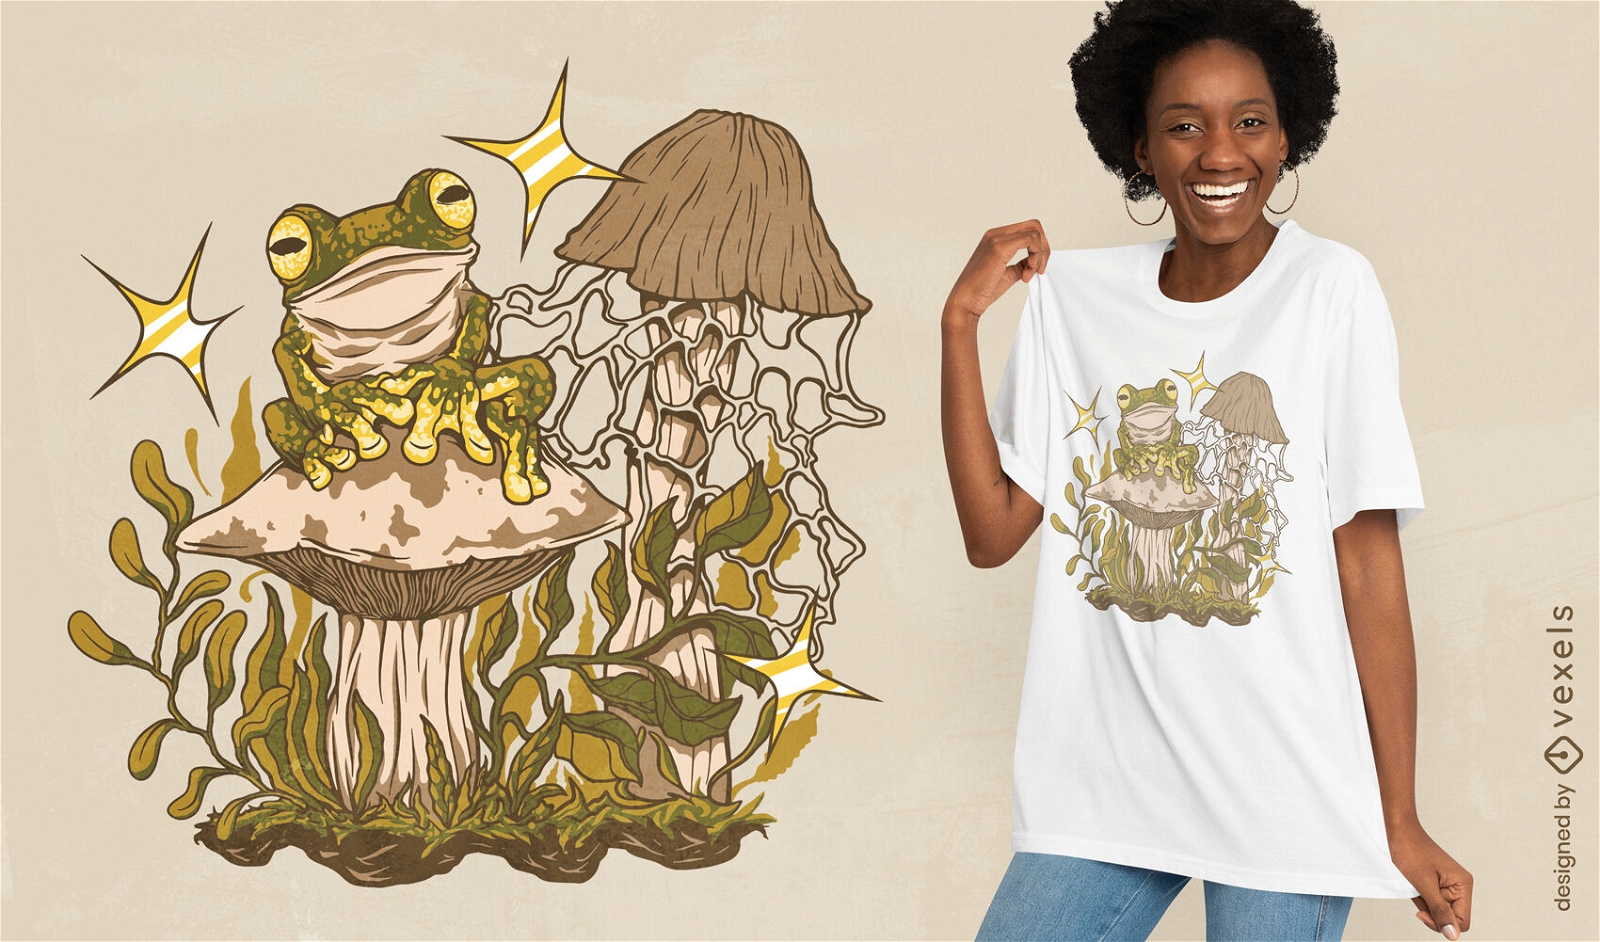 Frog and mushrooms t-shirt design